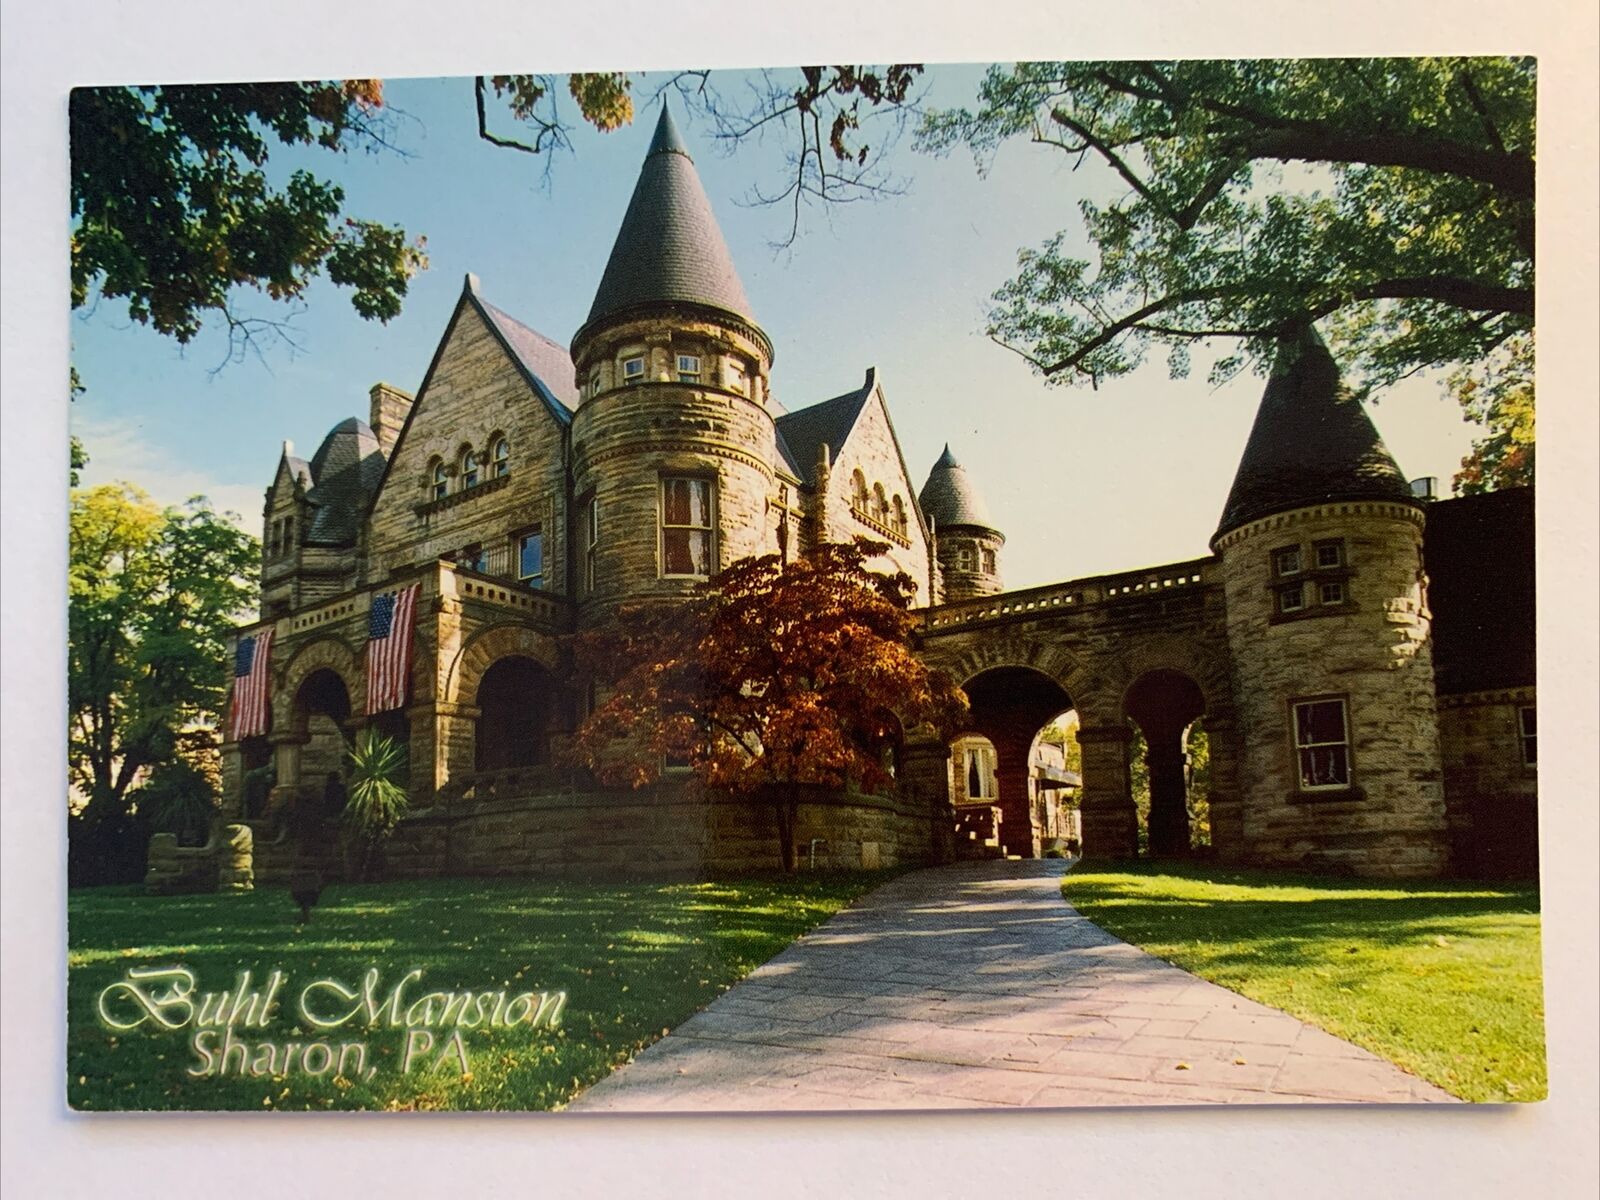 buhl mansion art gallery sharon pennsylvania postcard